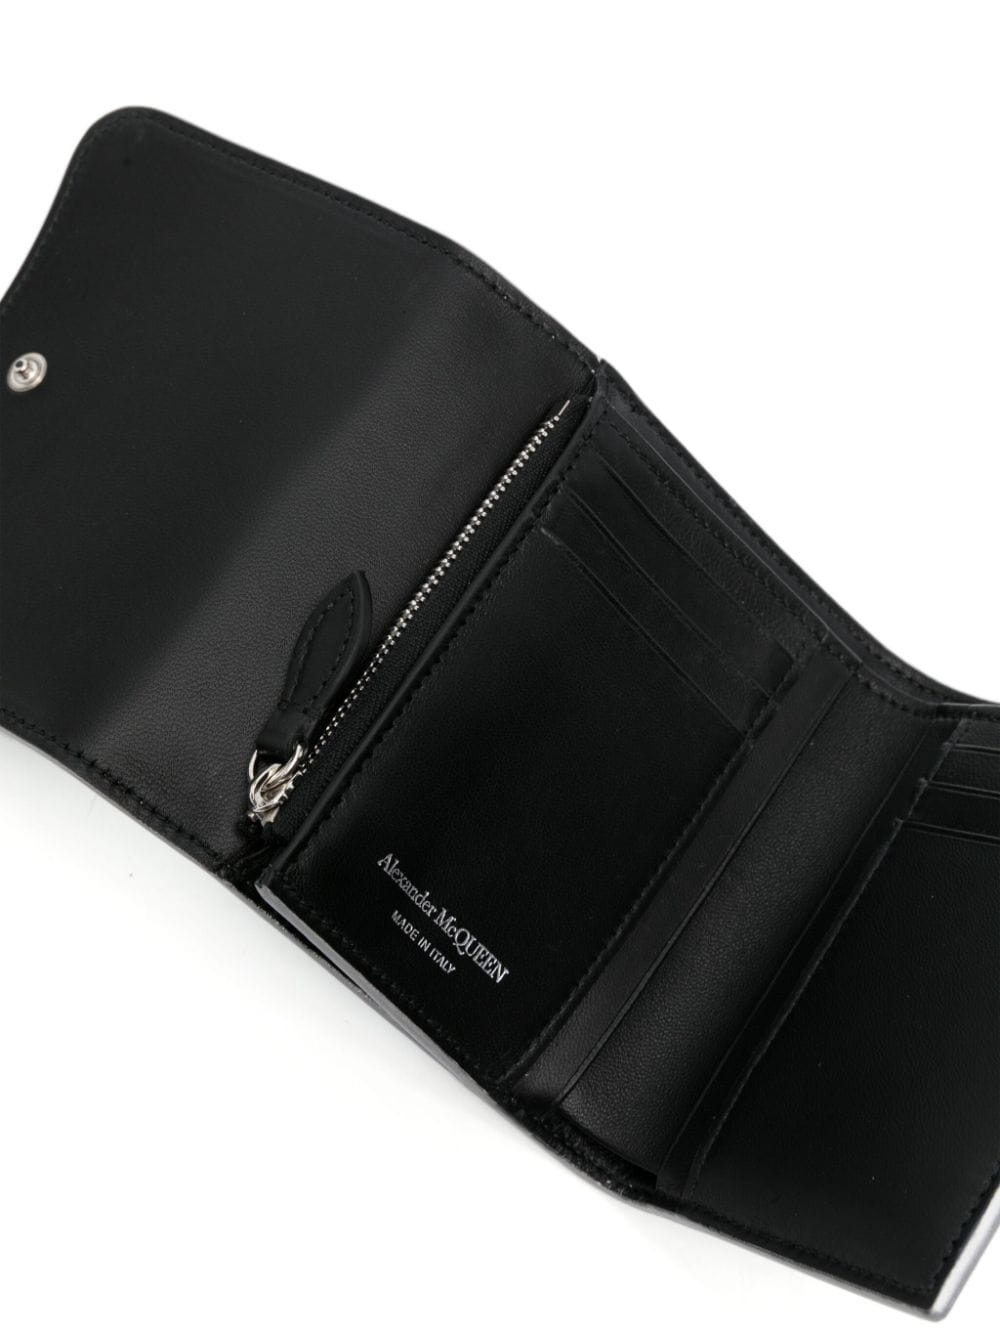 tri-fold metallic leather wallet - 3